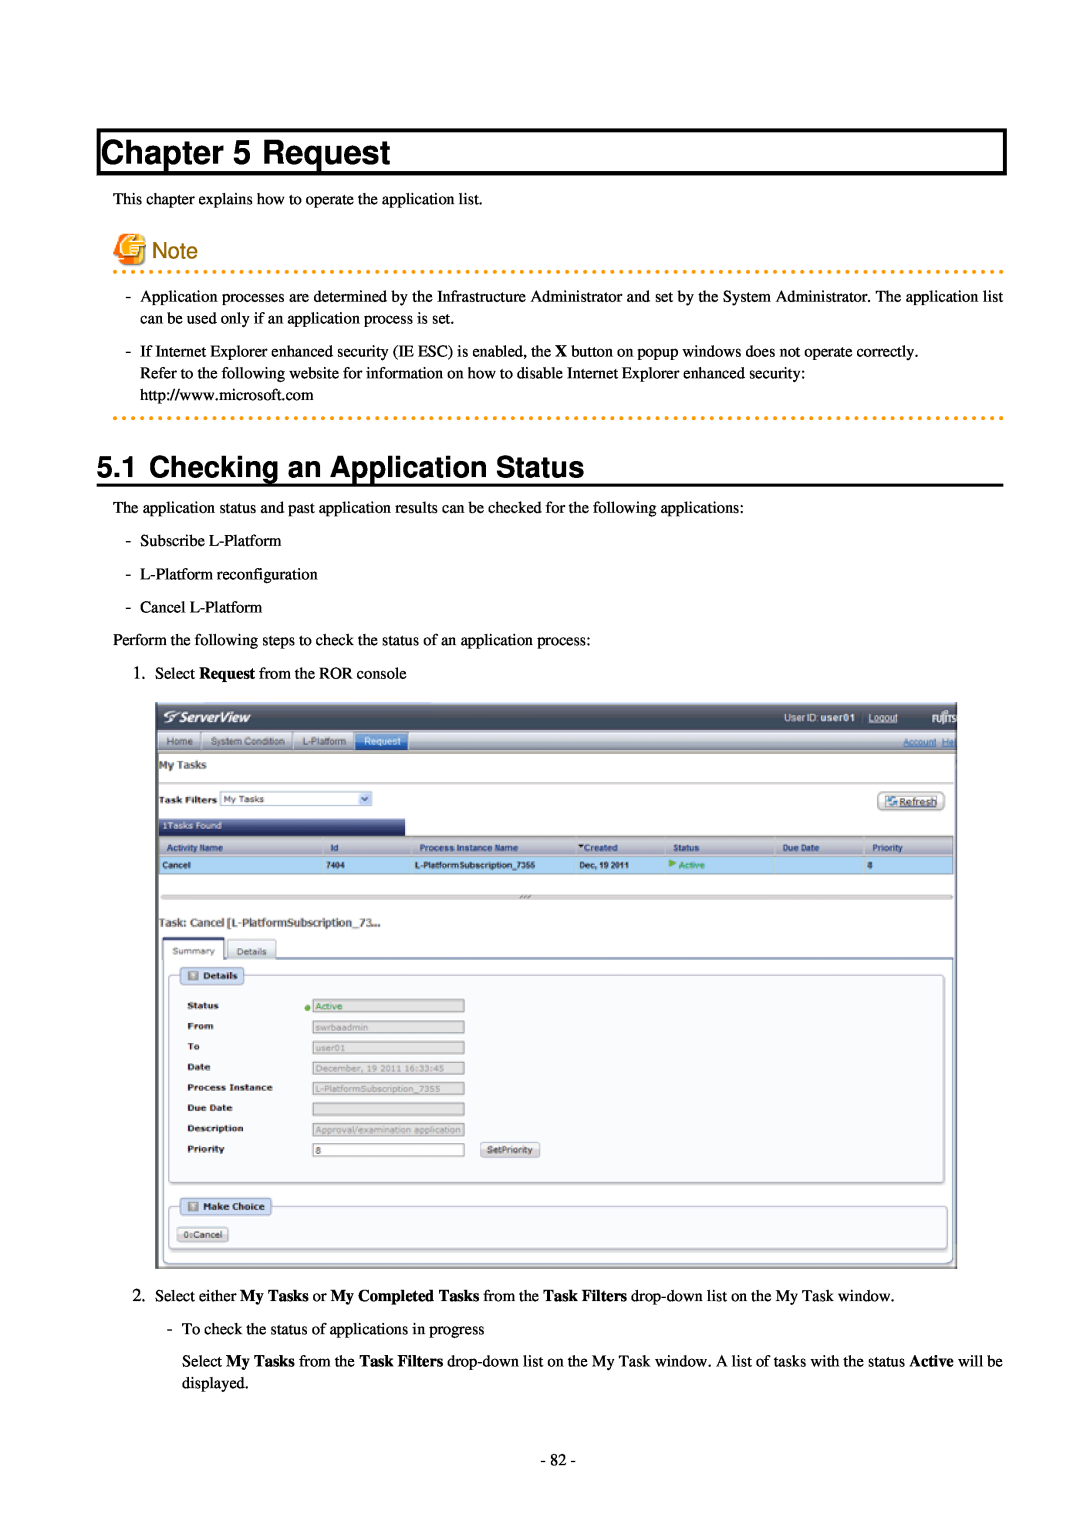 Fujitsu V3.0.0 manual Request, Checking an Application Status 